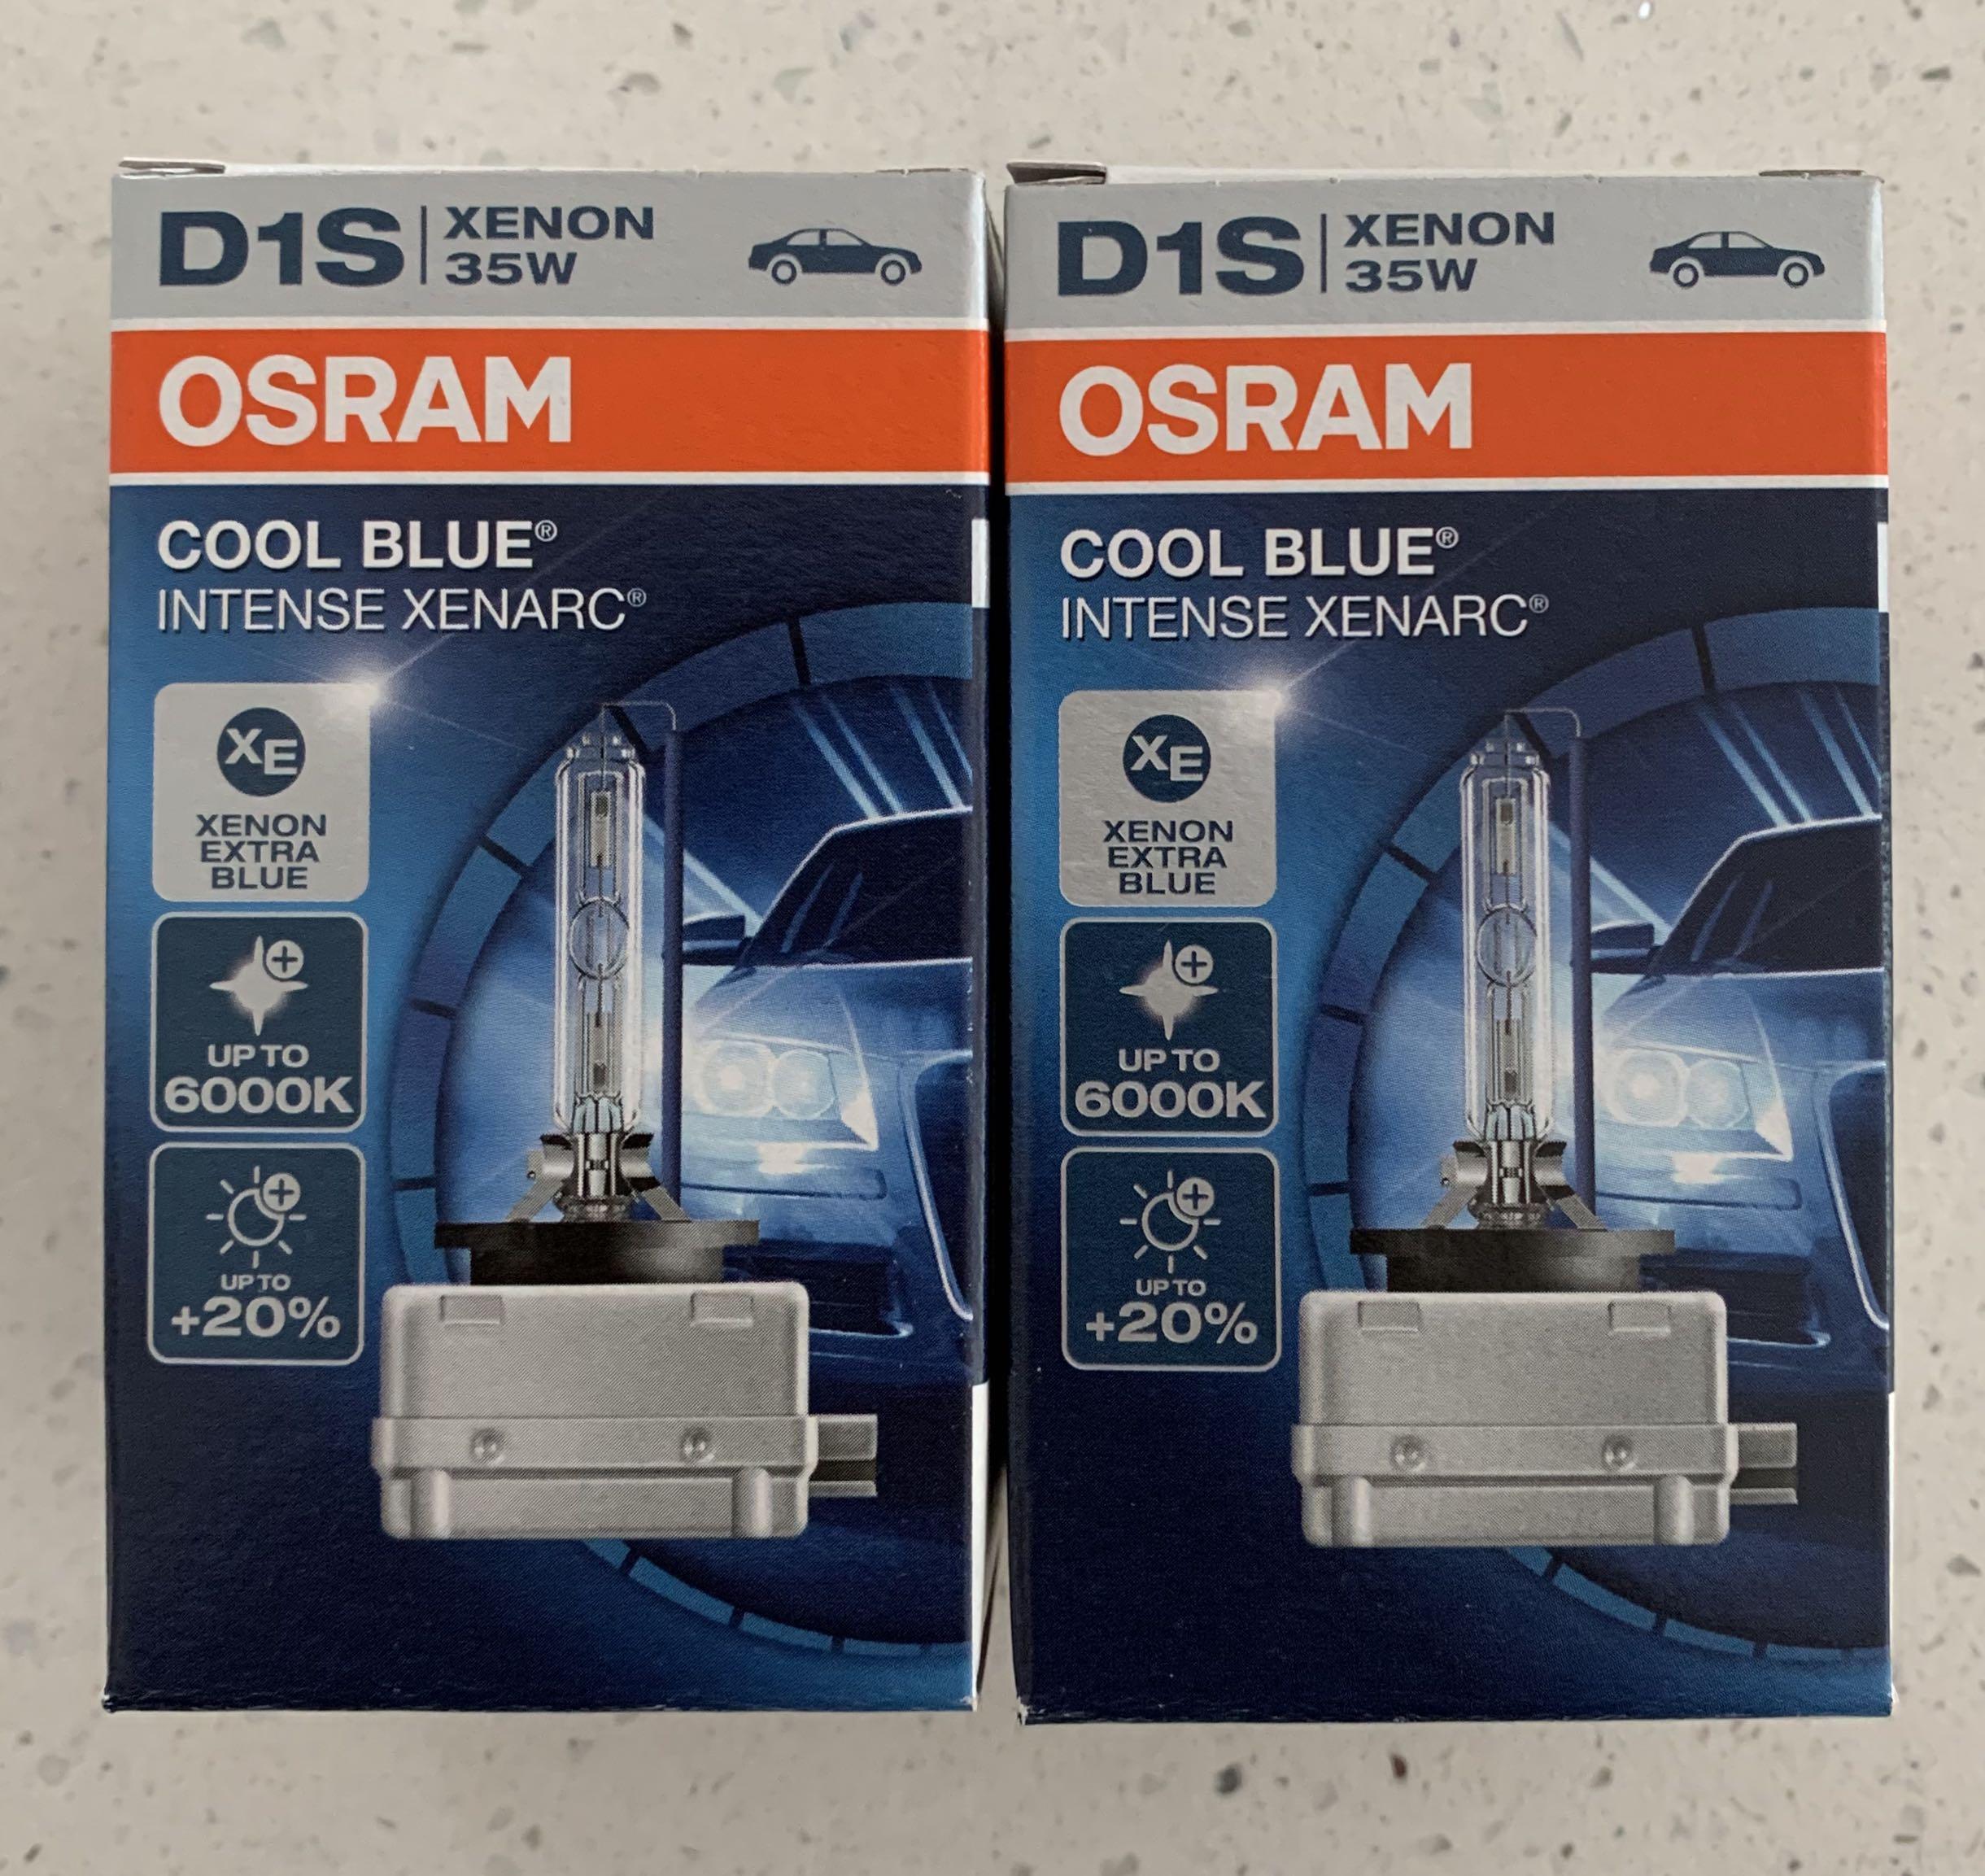 OSRAM Xenarc D1S Xenon HID Headlight Bulbs